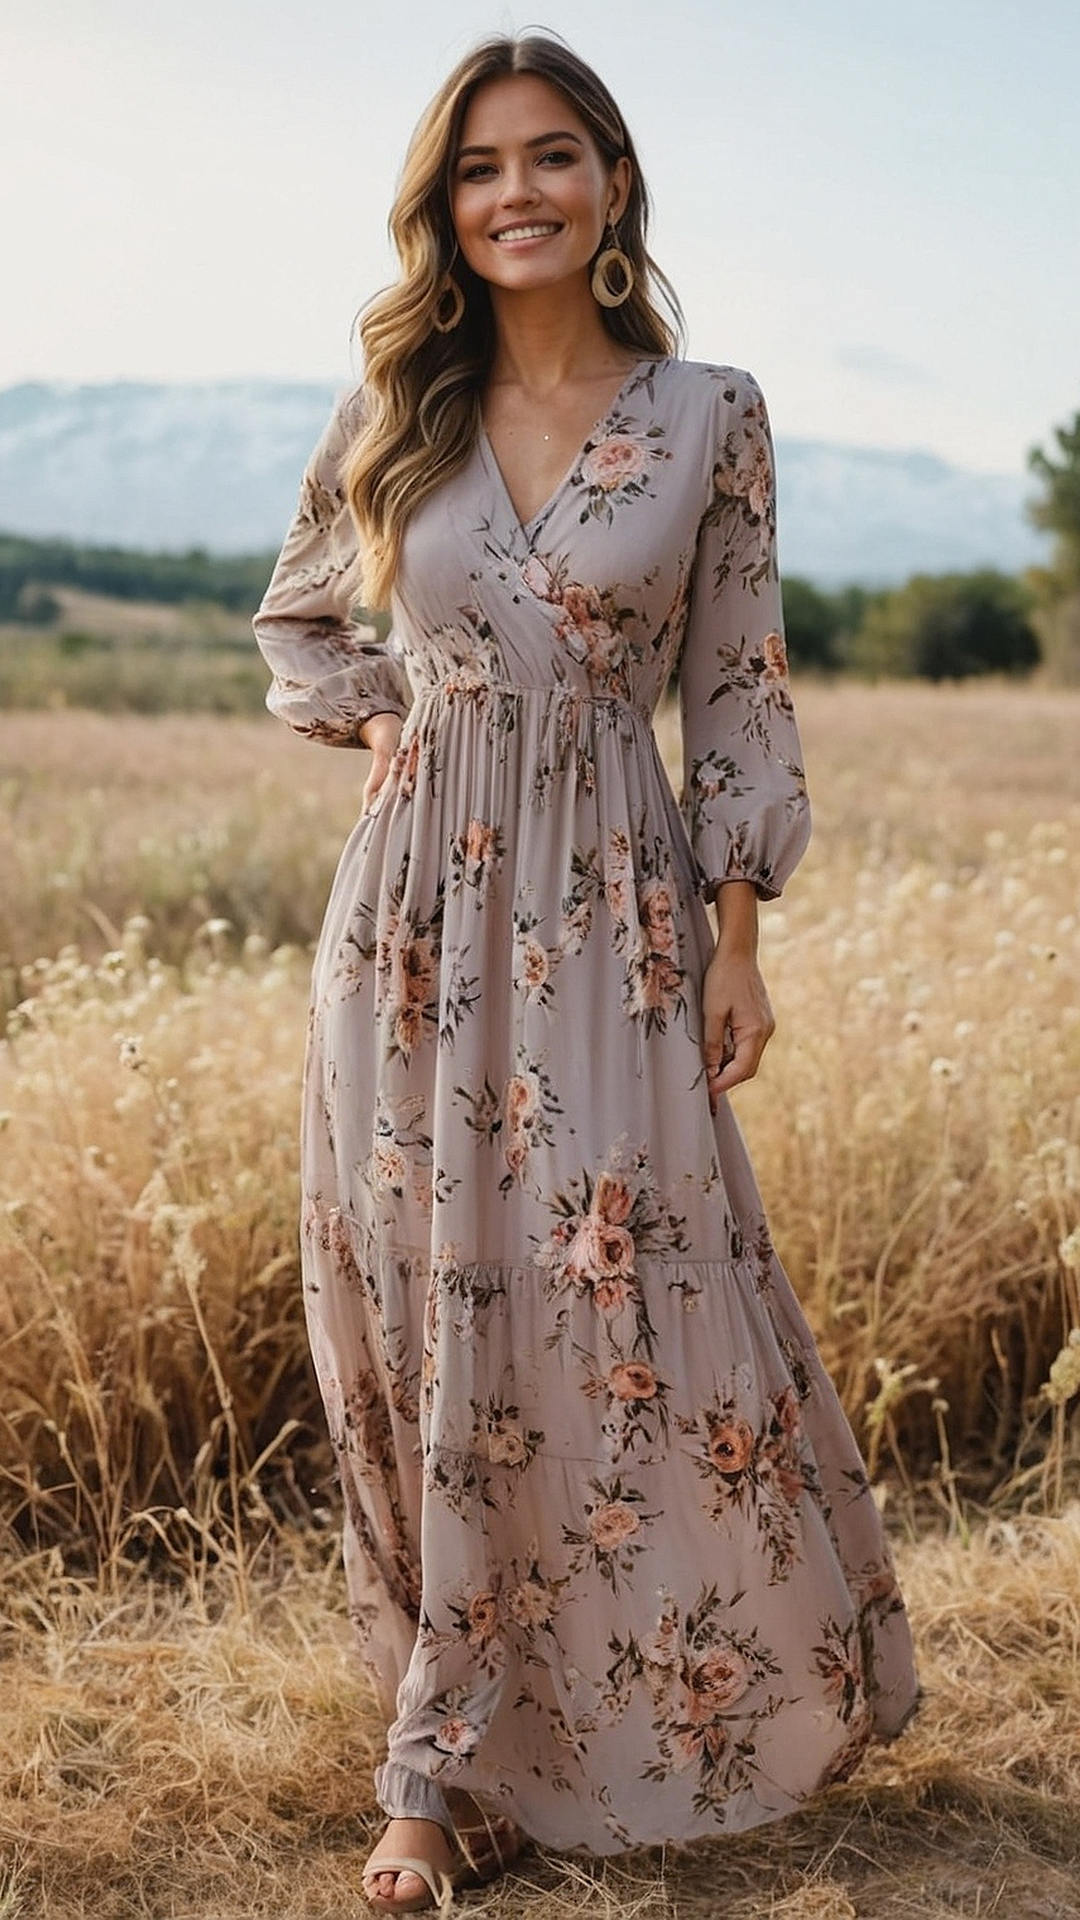 Petals and Patterns: Floral Maxi Dress Inspiration